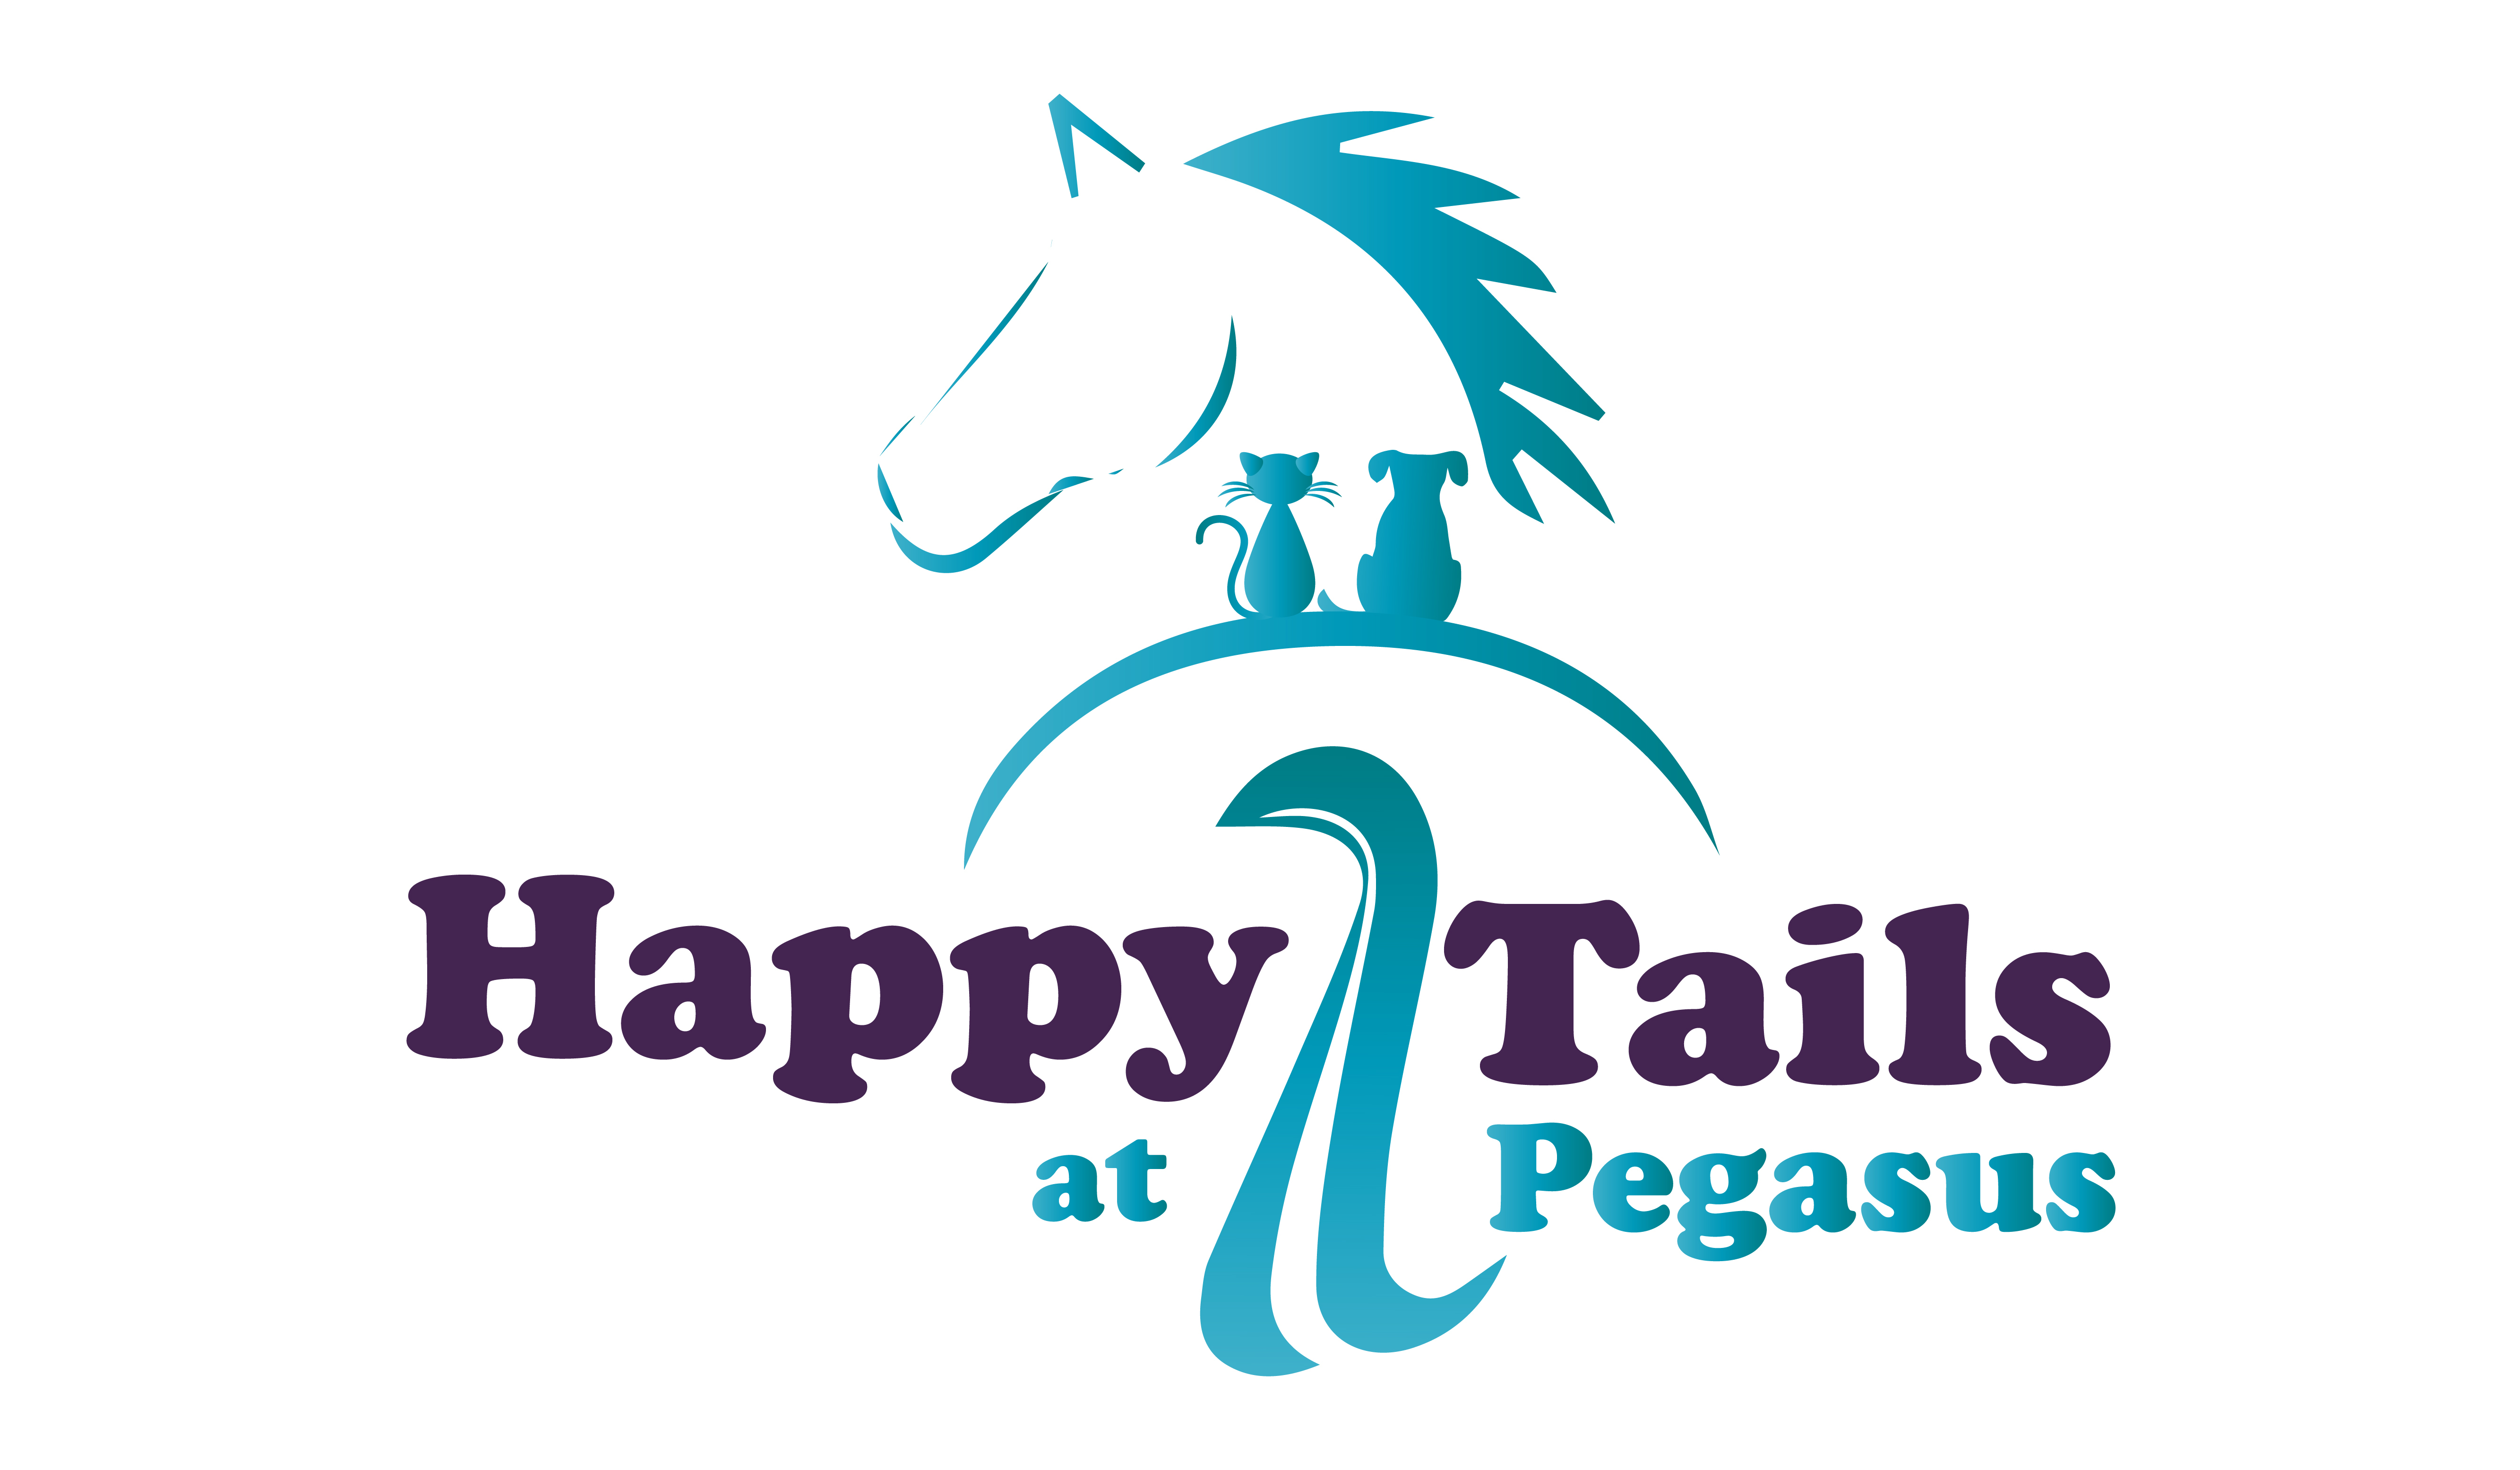 Happy Tails at Pegasus